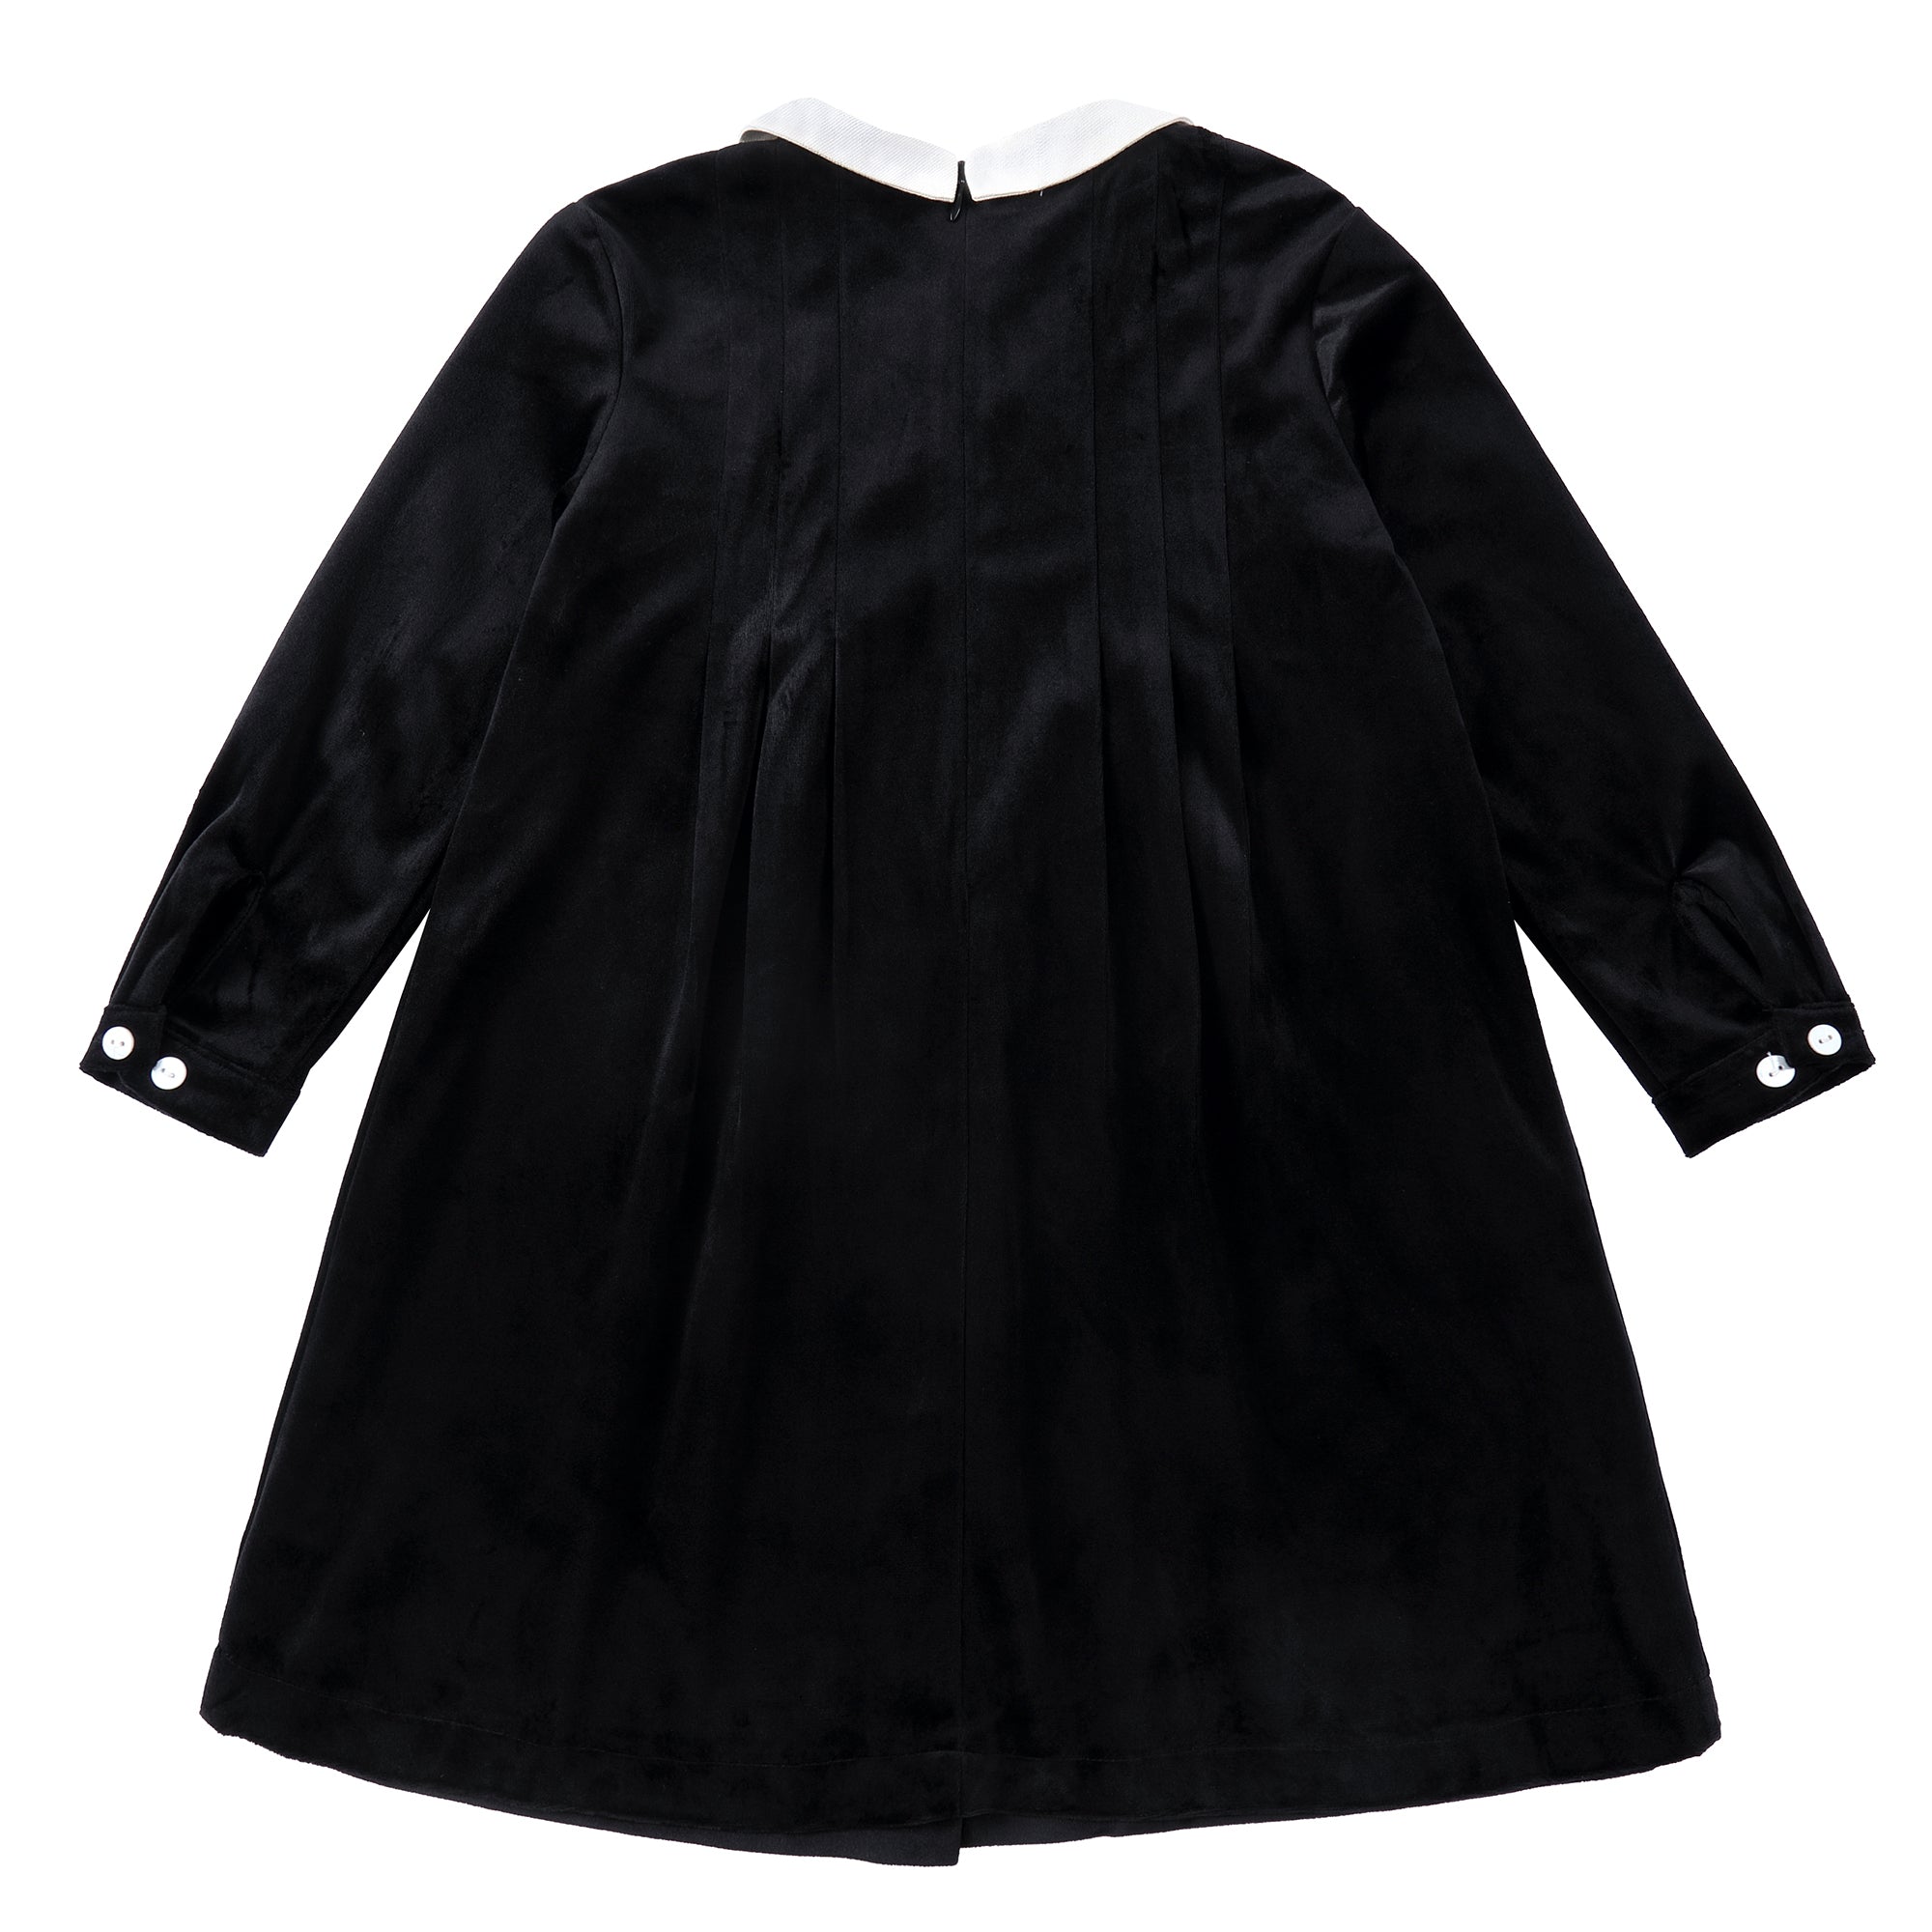 Black Velvet Dress With Ivory Accents